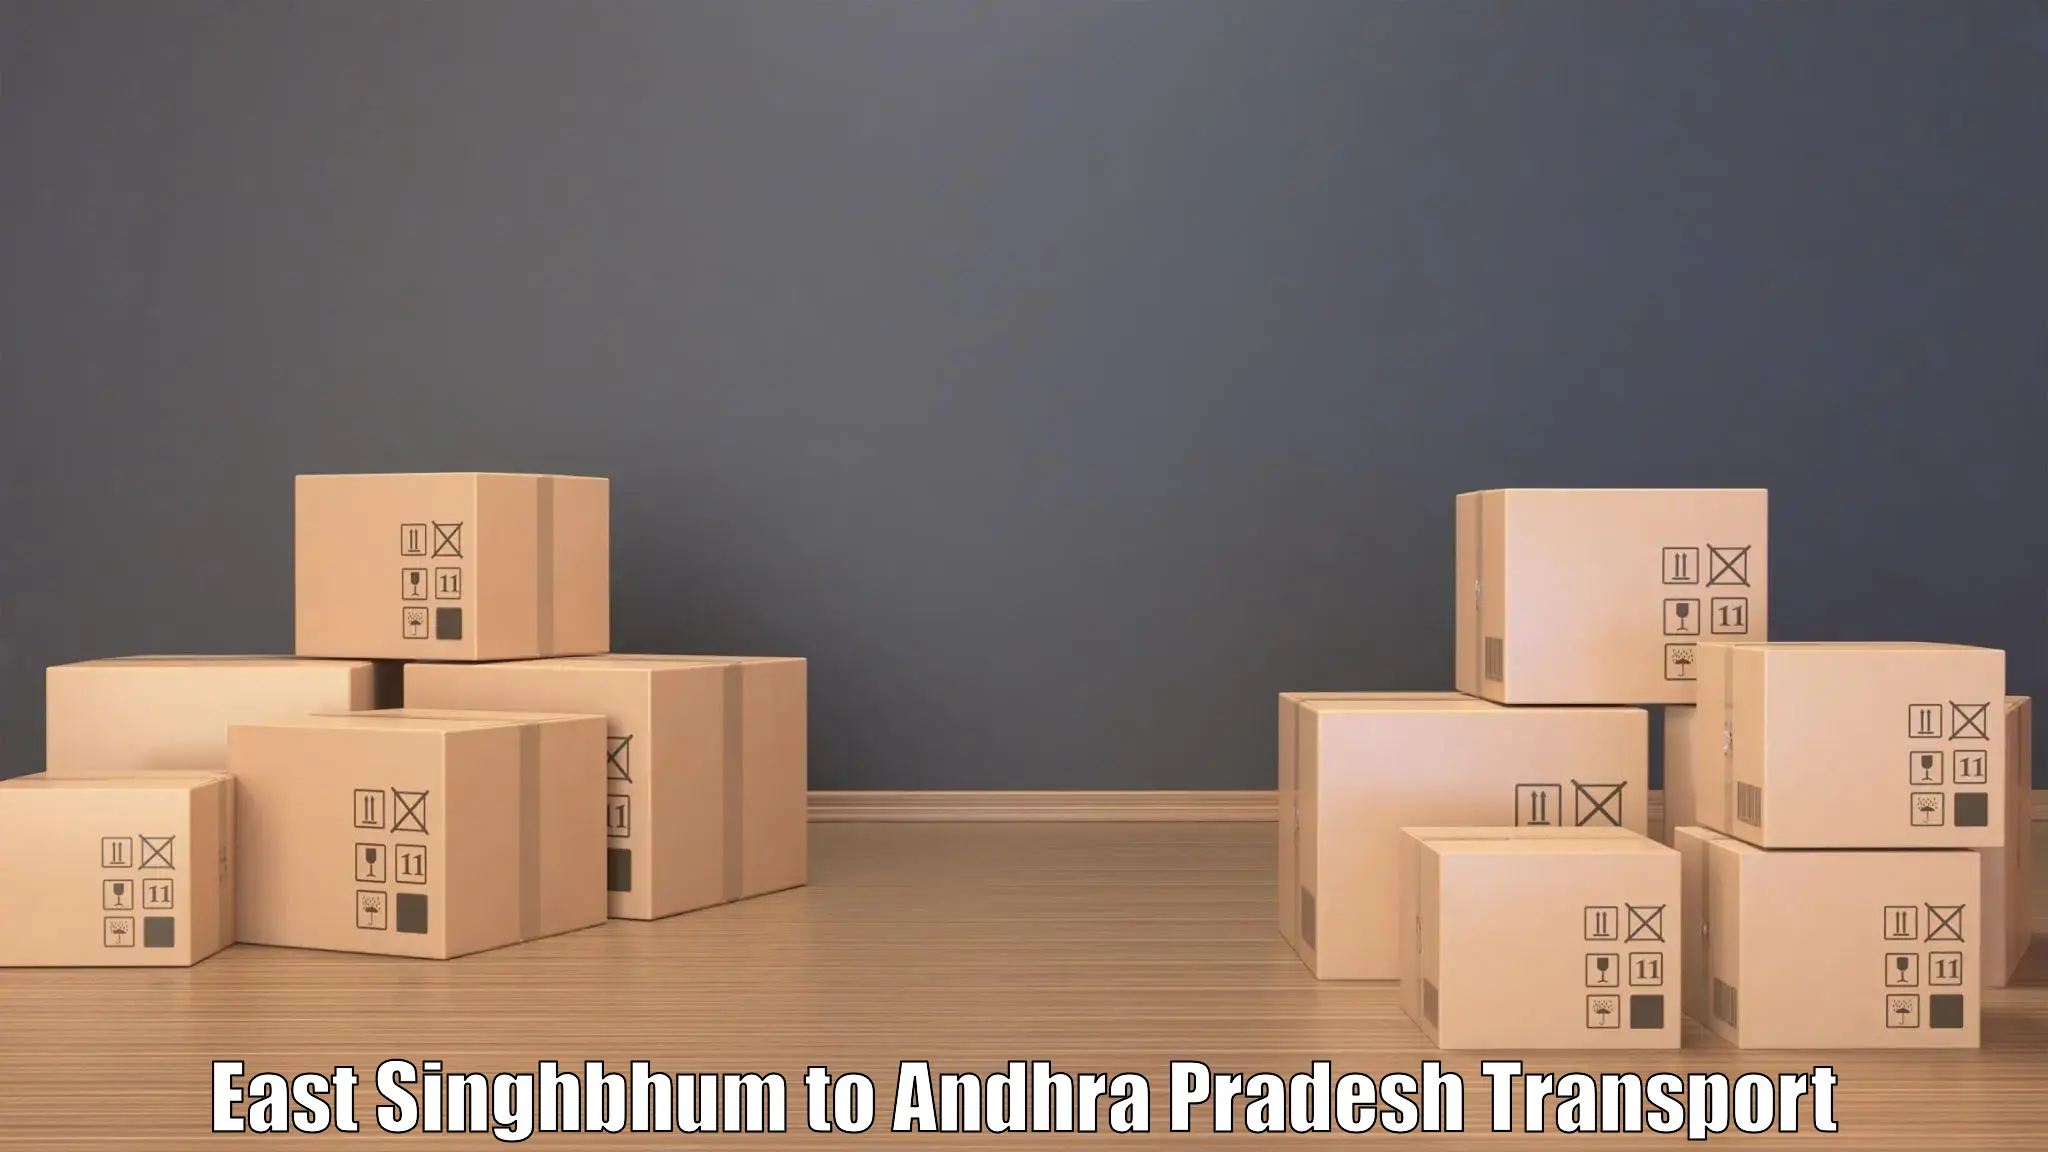 Cargo train transport services East Singhbhum to Piduguralla